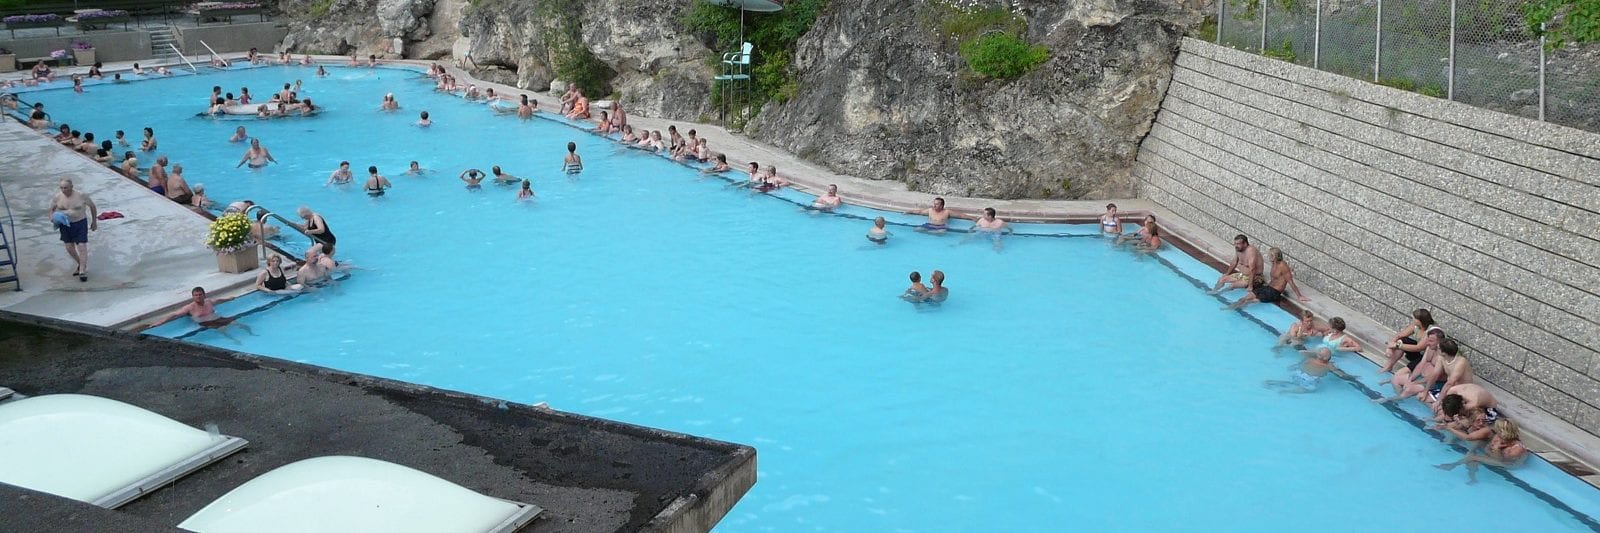 Hot Springs in British Columbia